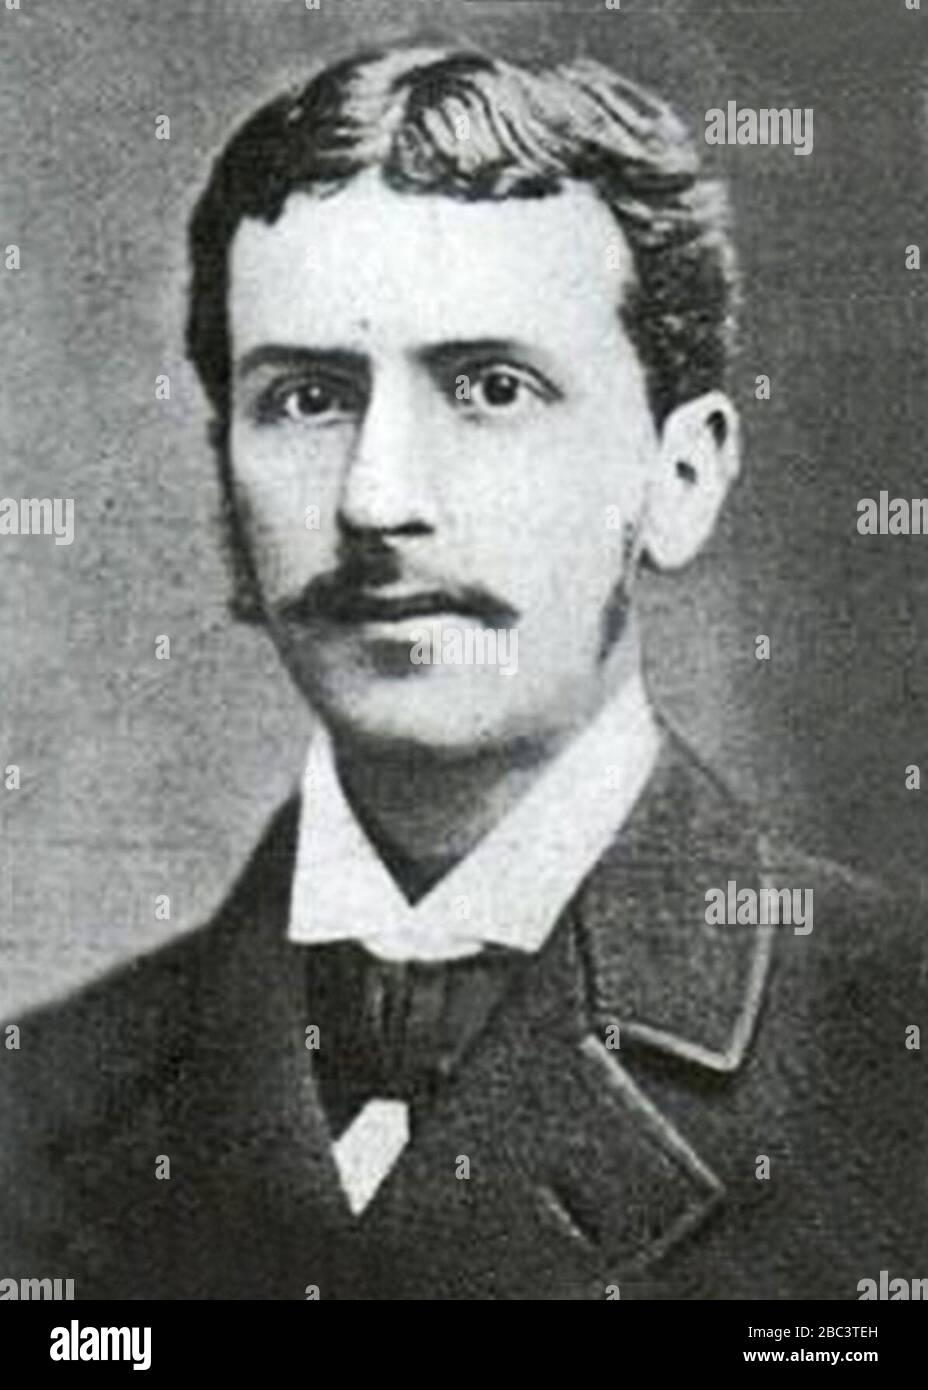 Guillaume Bernays - assassinat 7 janvier 1882. Foto Stock